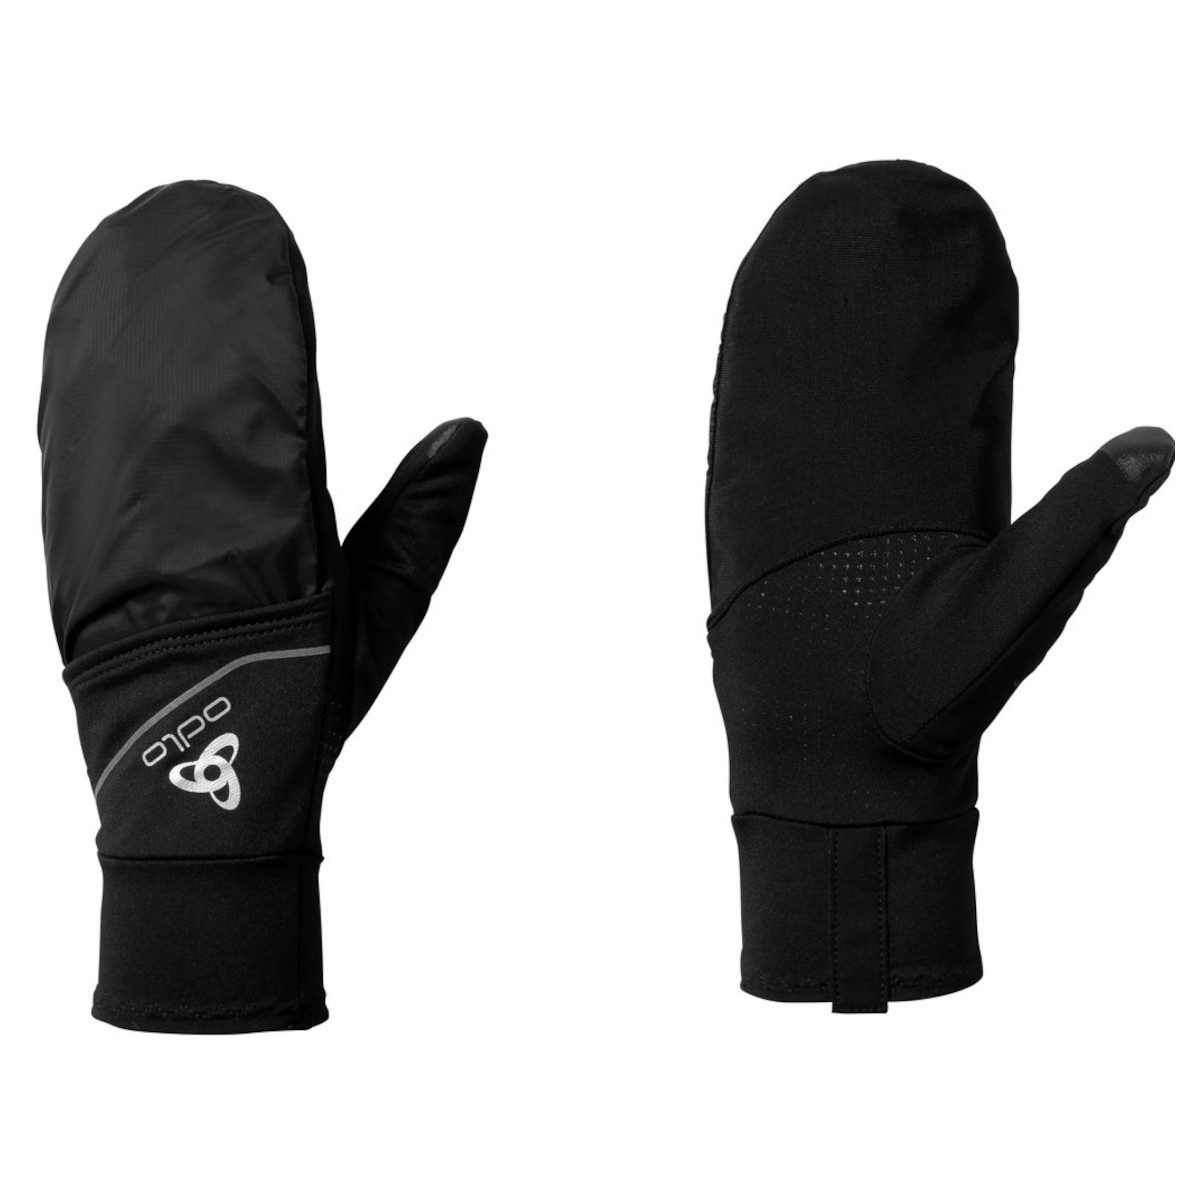 Produktbild von Odlo Intensity Cover Safety Light Handschuhe - schwarz